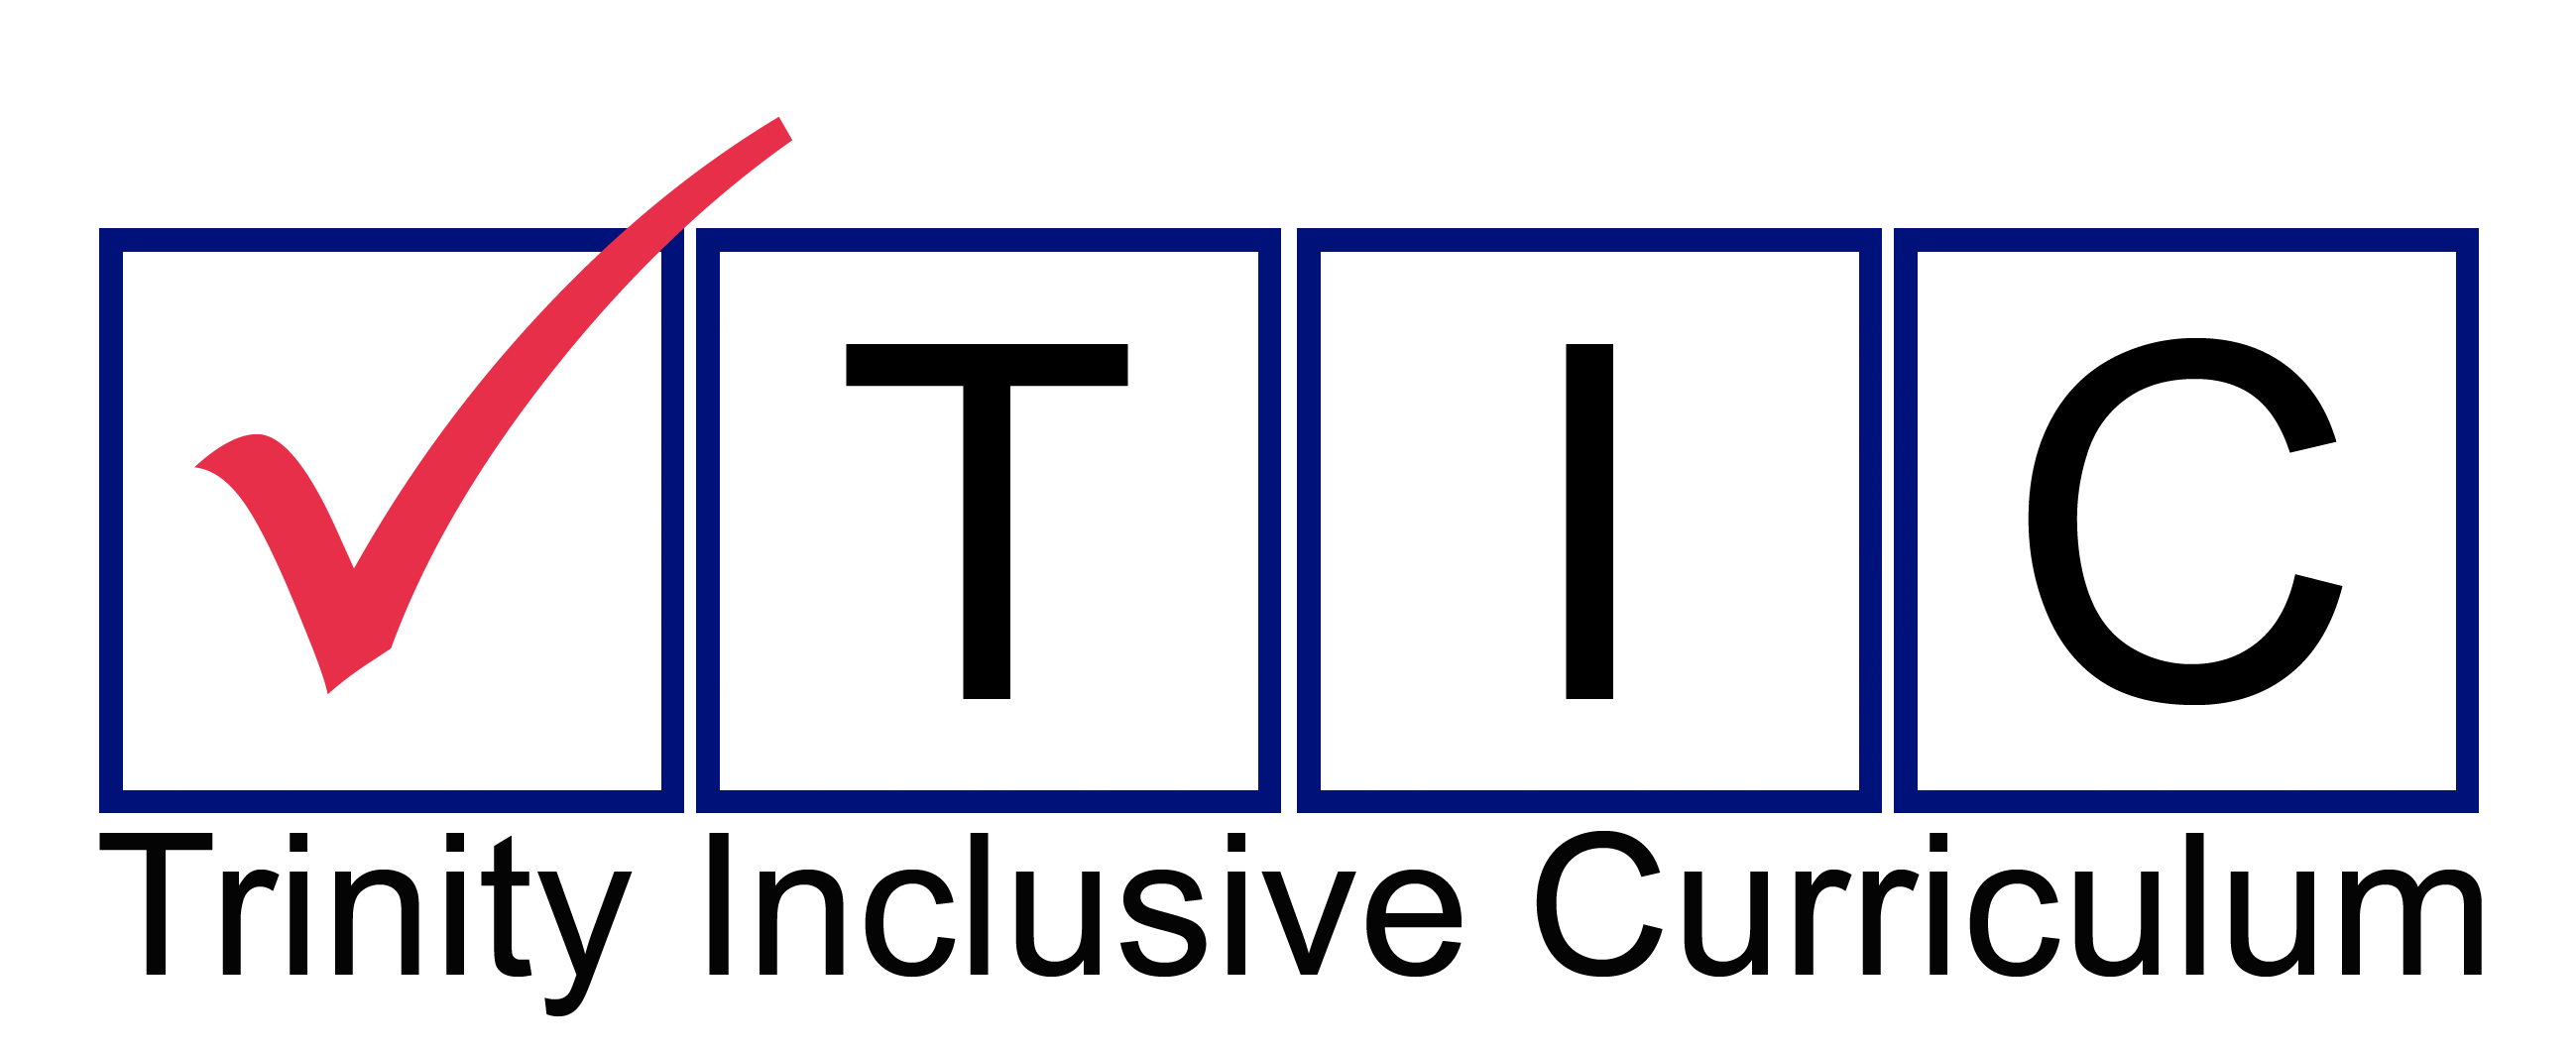 Tic Logo - Inclusive Curriculum New : Trinity College Dublin, the University of ...